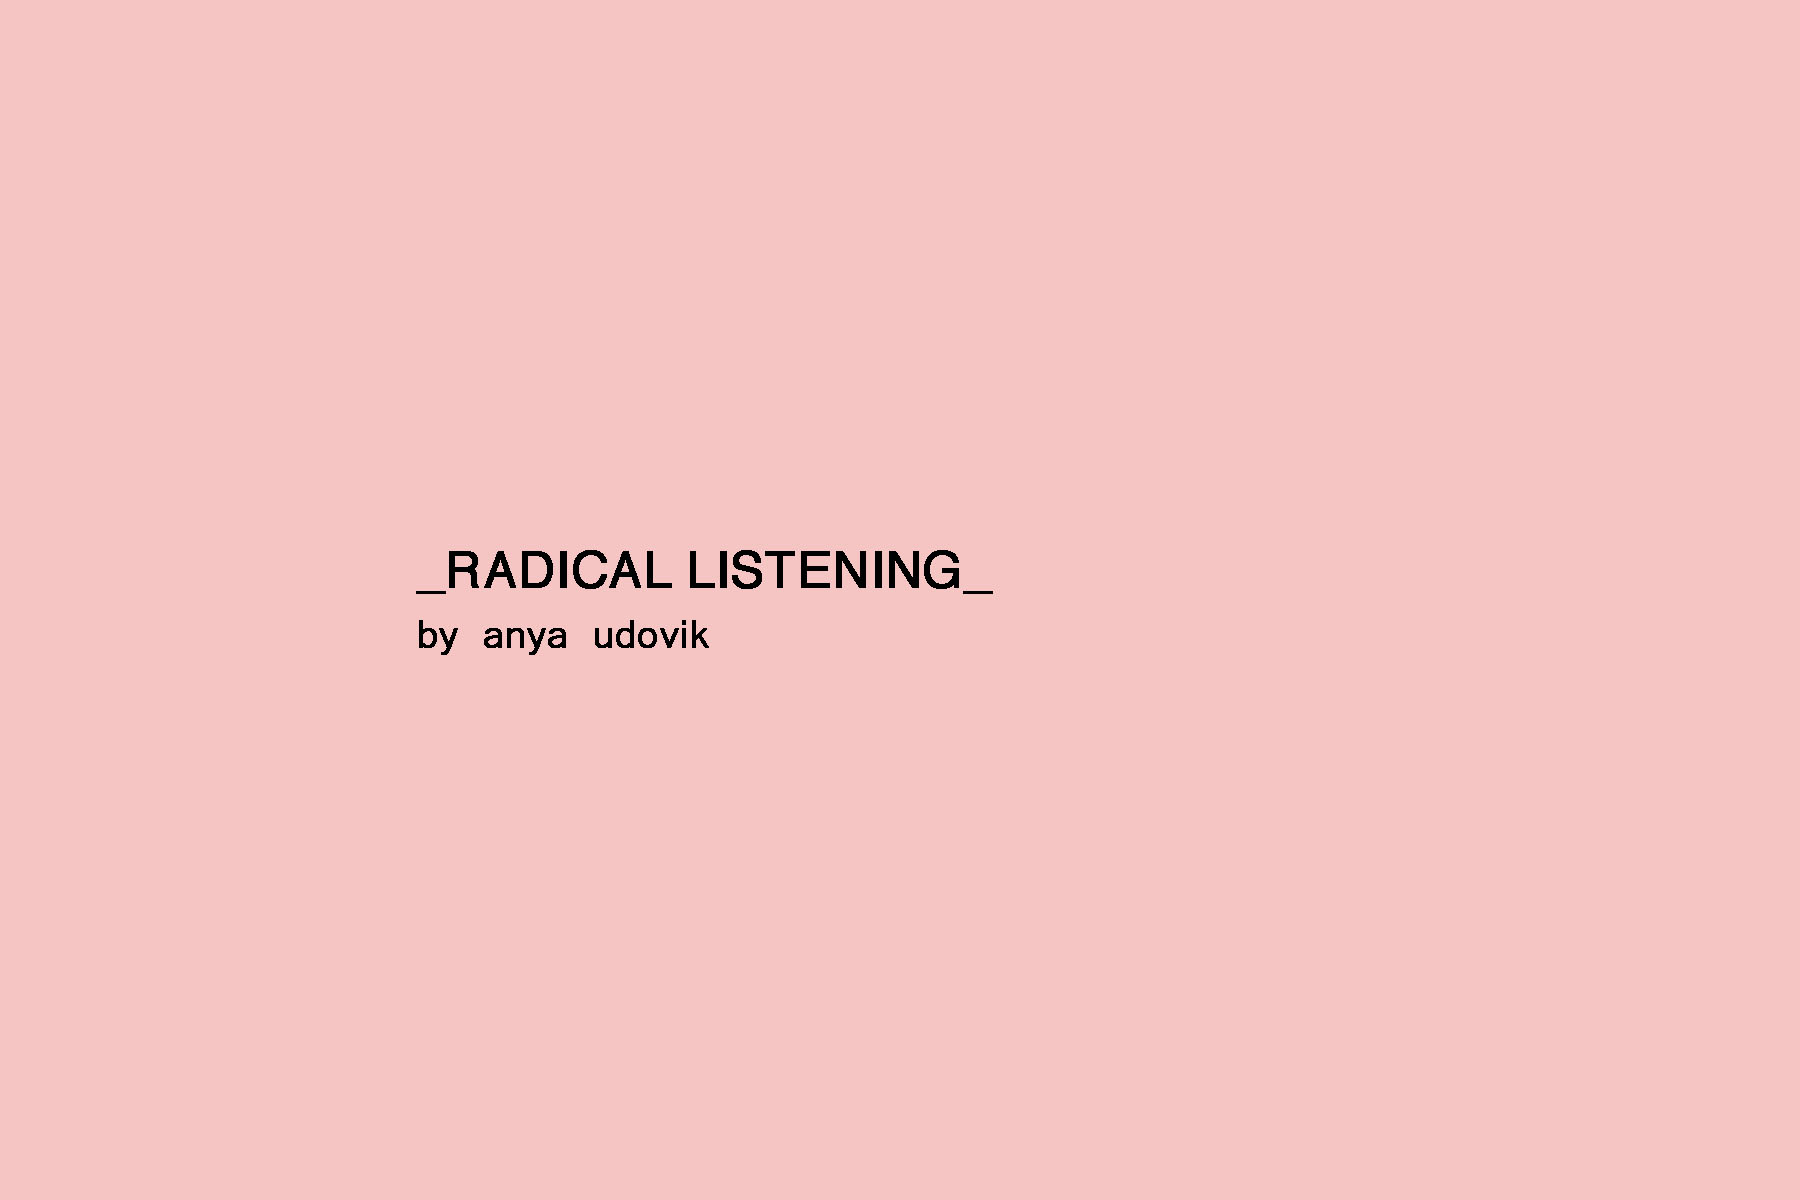 Radical listening